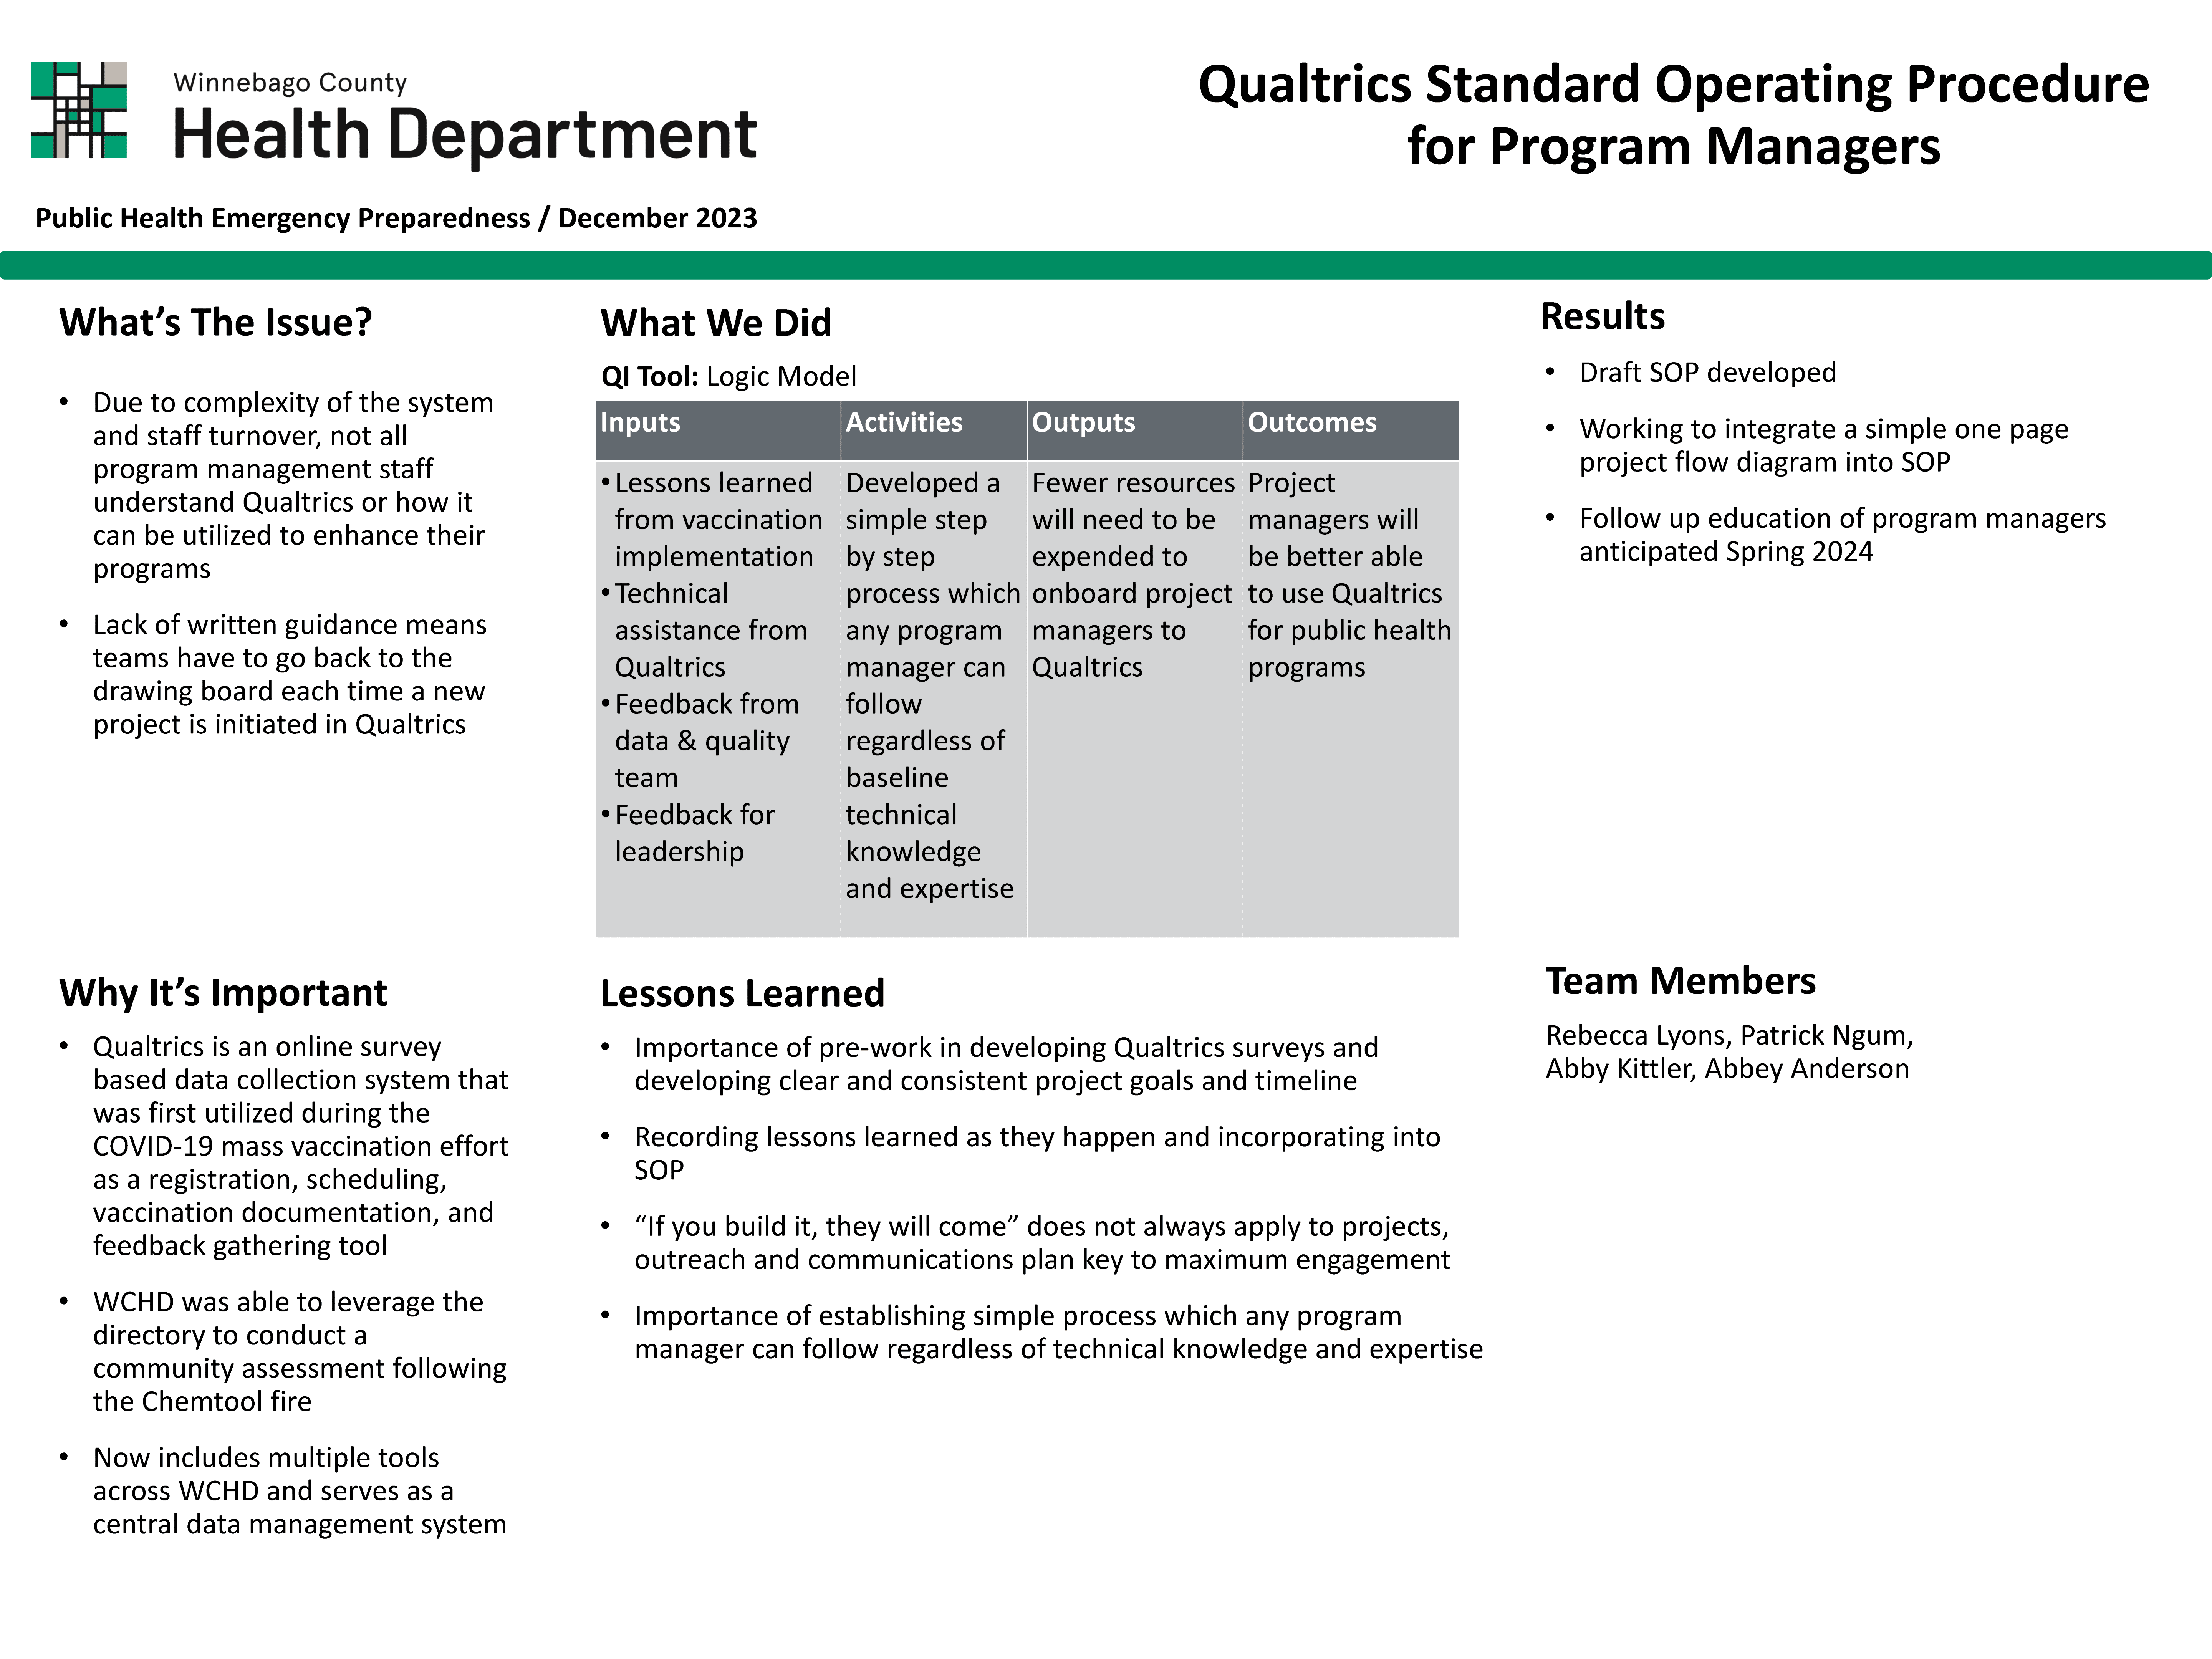 Emergency Preparedness Qualtrics Quality Improvement Plan 2023 summary